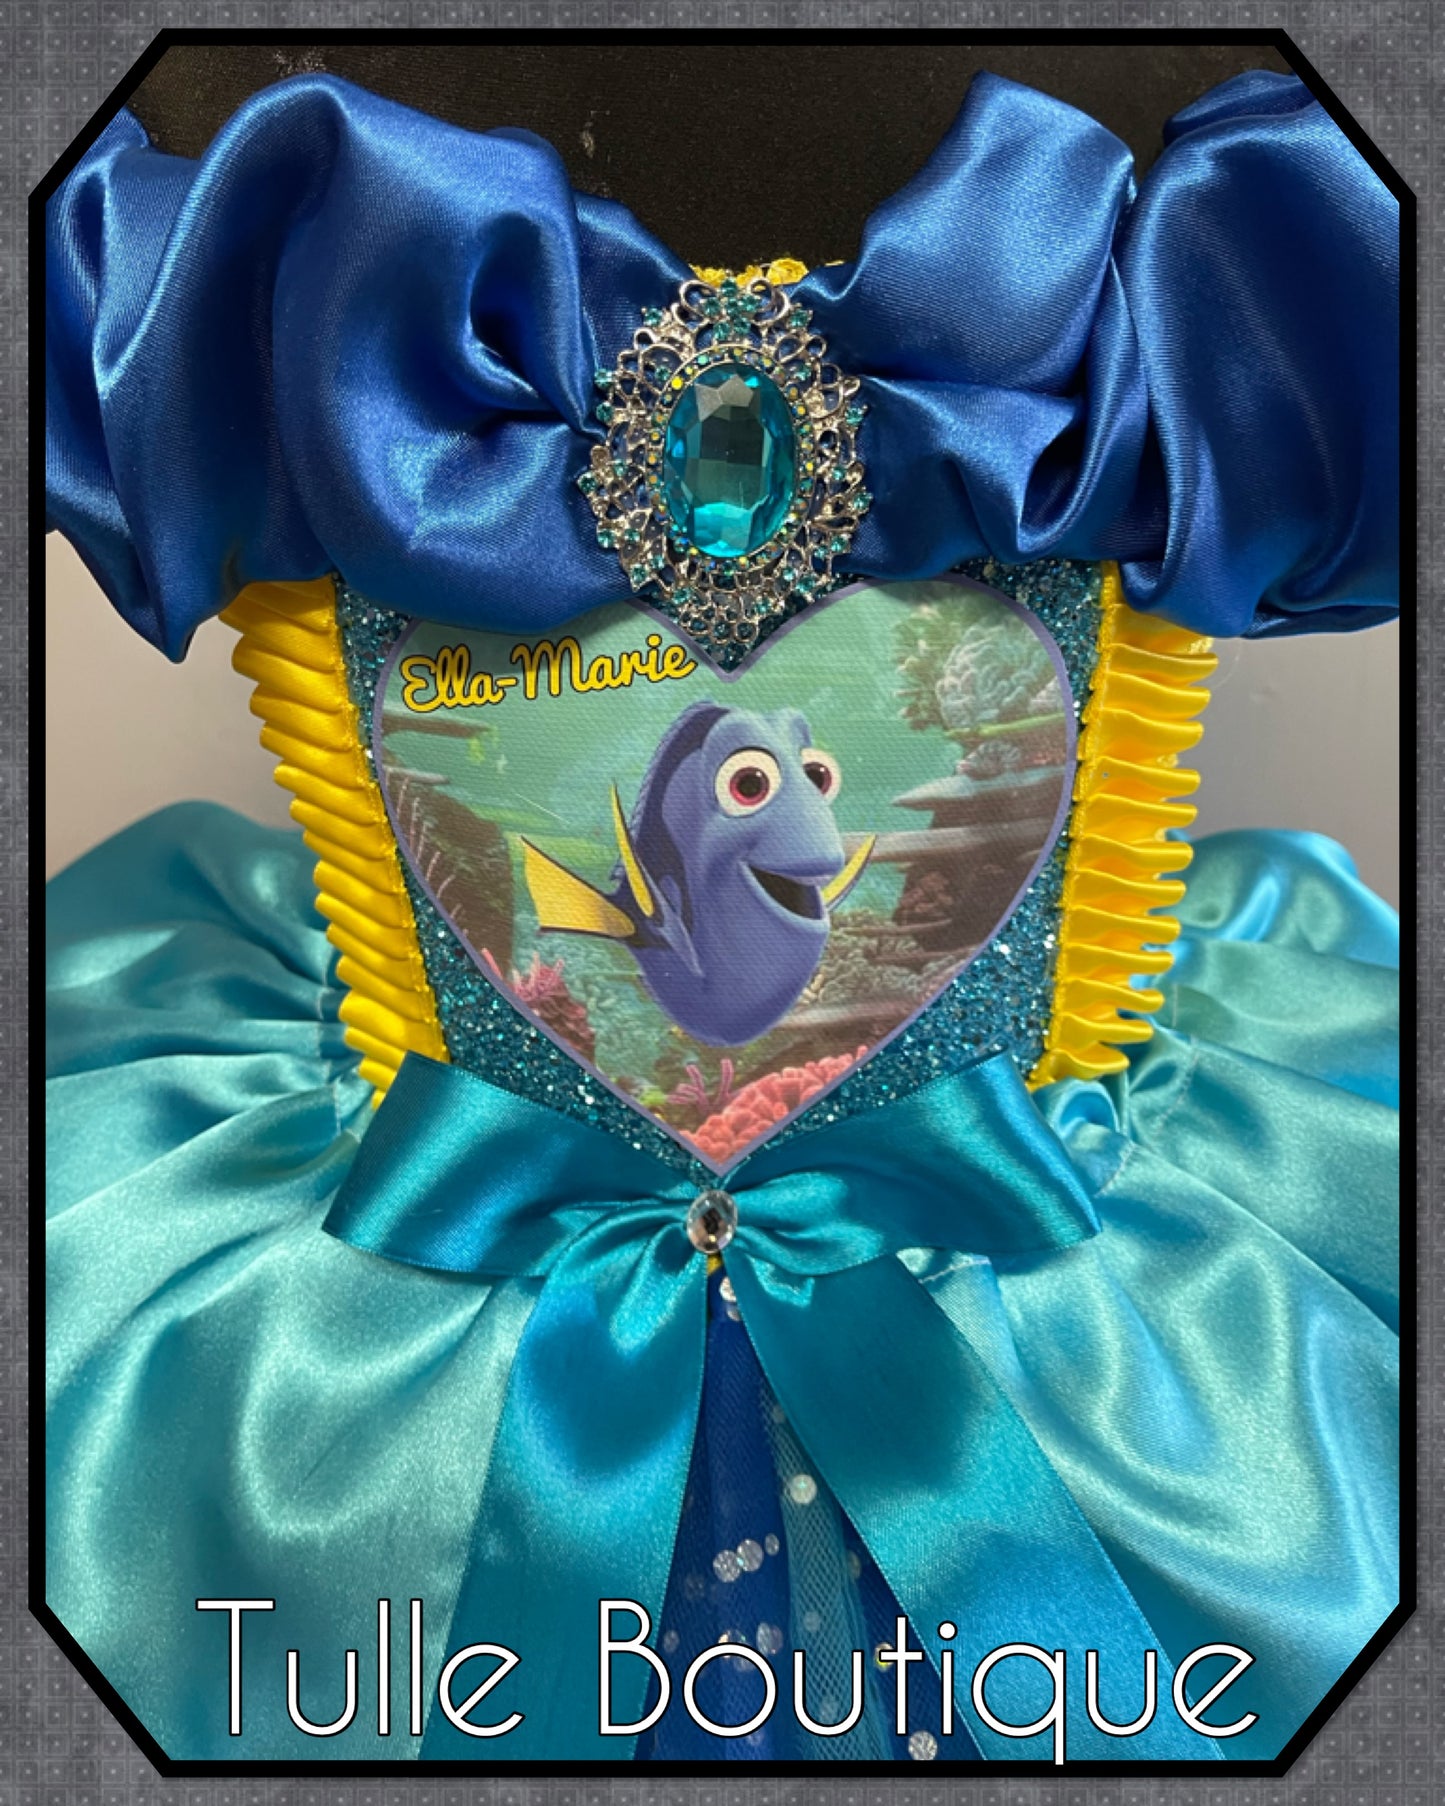 Dory fish Princess ballgown tutu dress